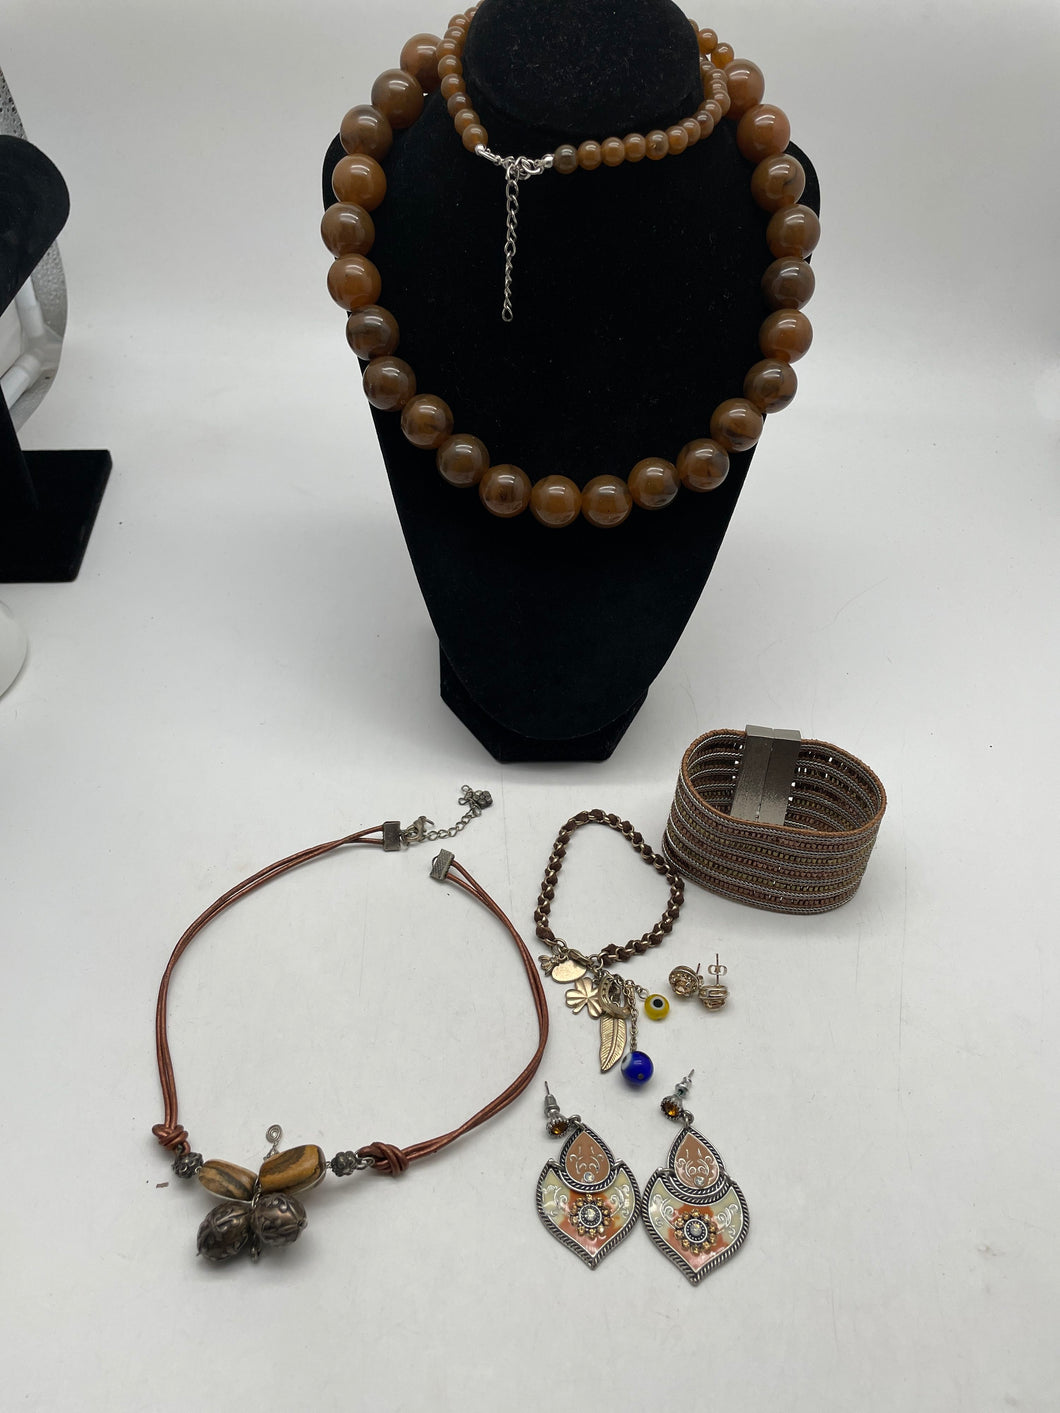 Set 6 Pcs ( 2 Necklaces, 2 Bracelet, 2 Earrings) Jewelry, Weight 188g